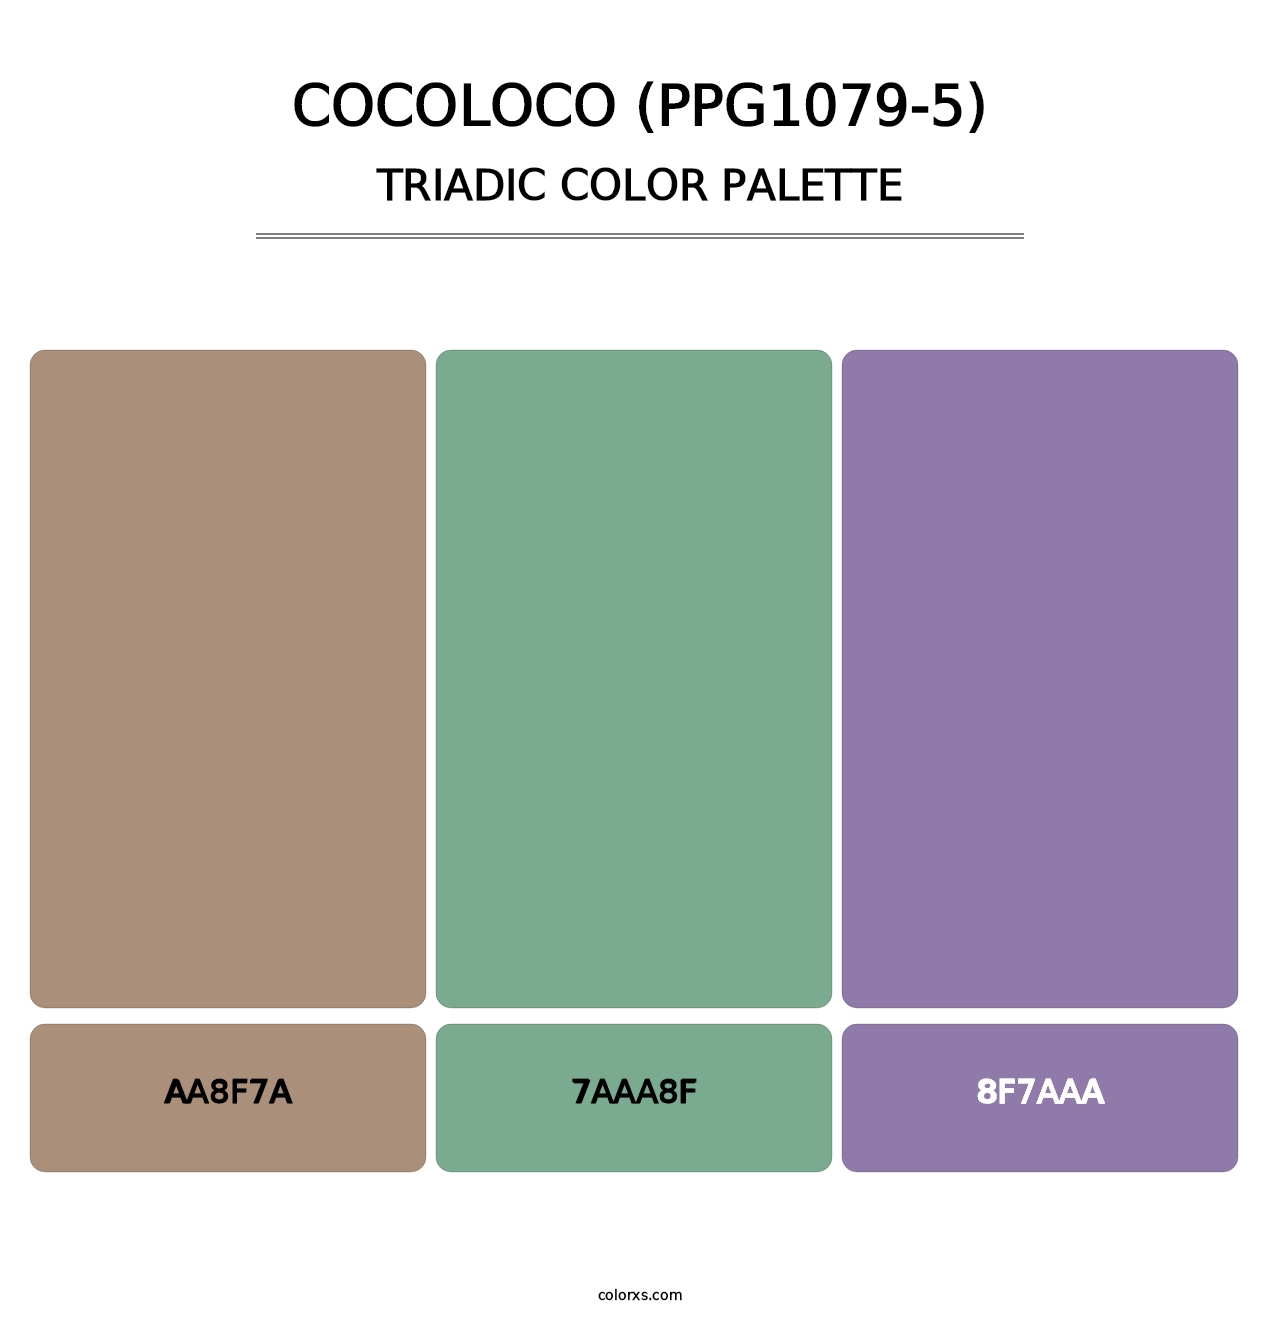 Cocoloco (PPG1079-5) - Triadic Color Palette